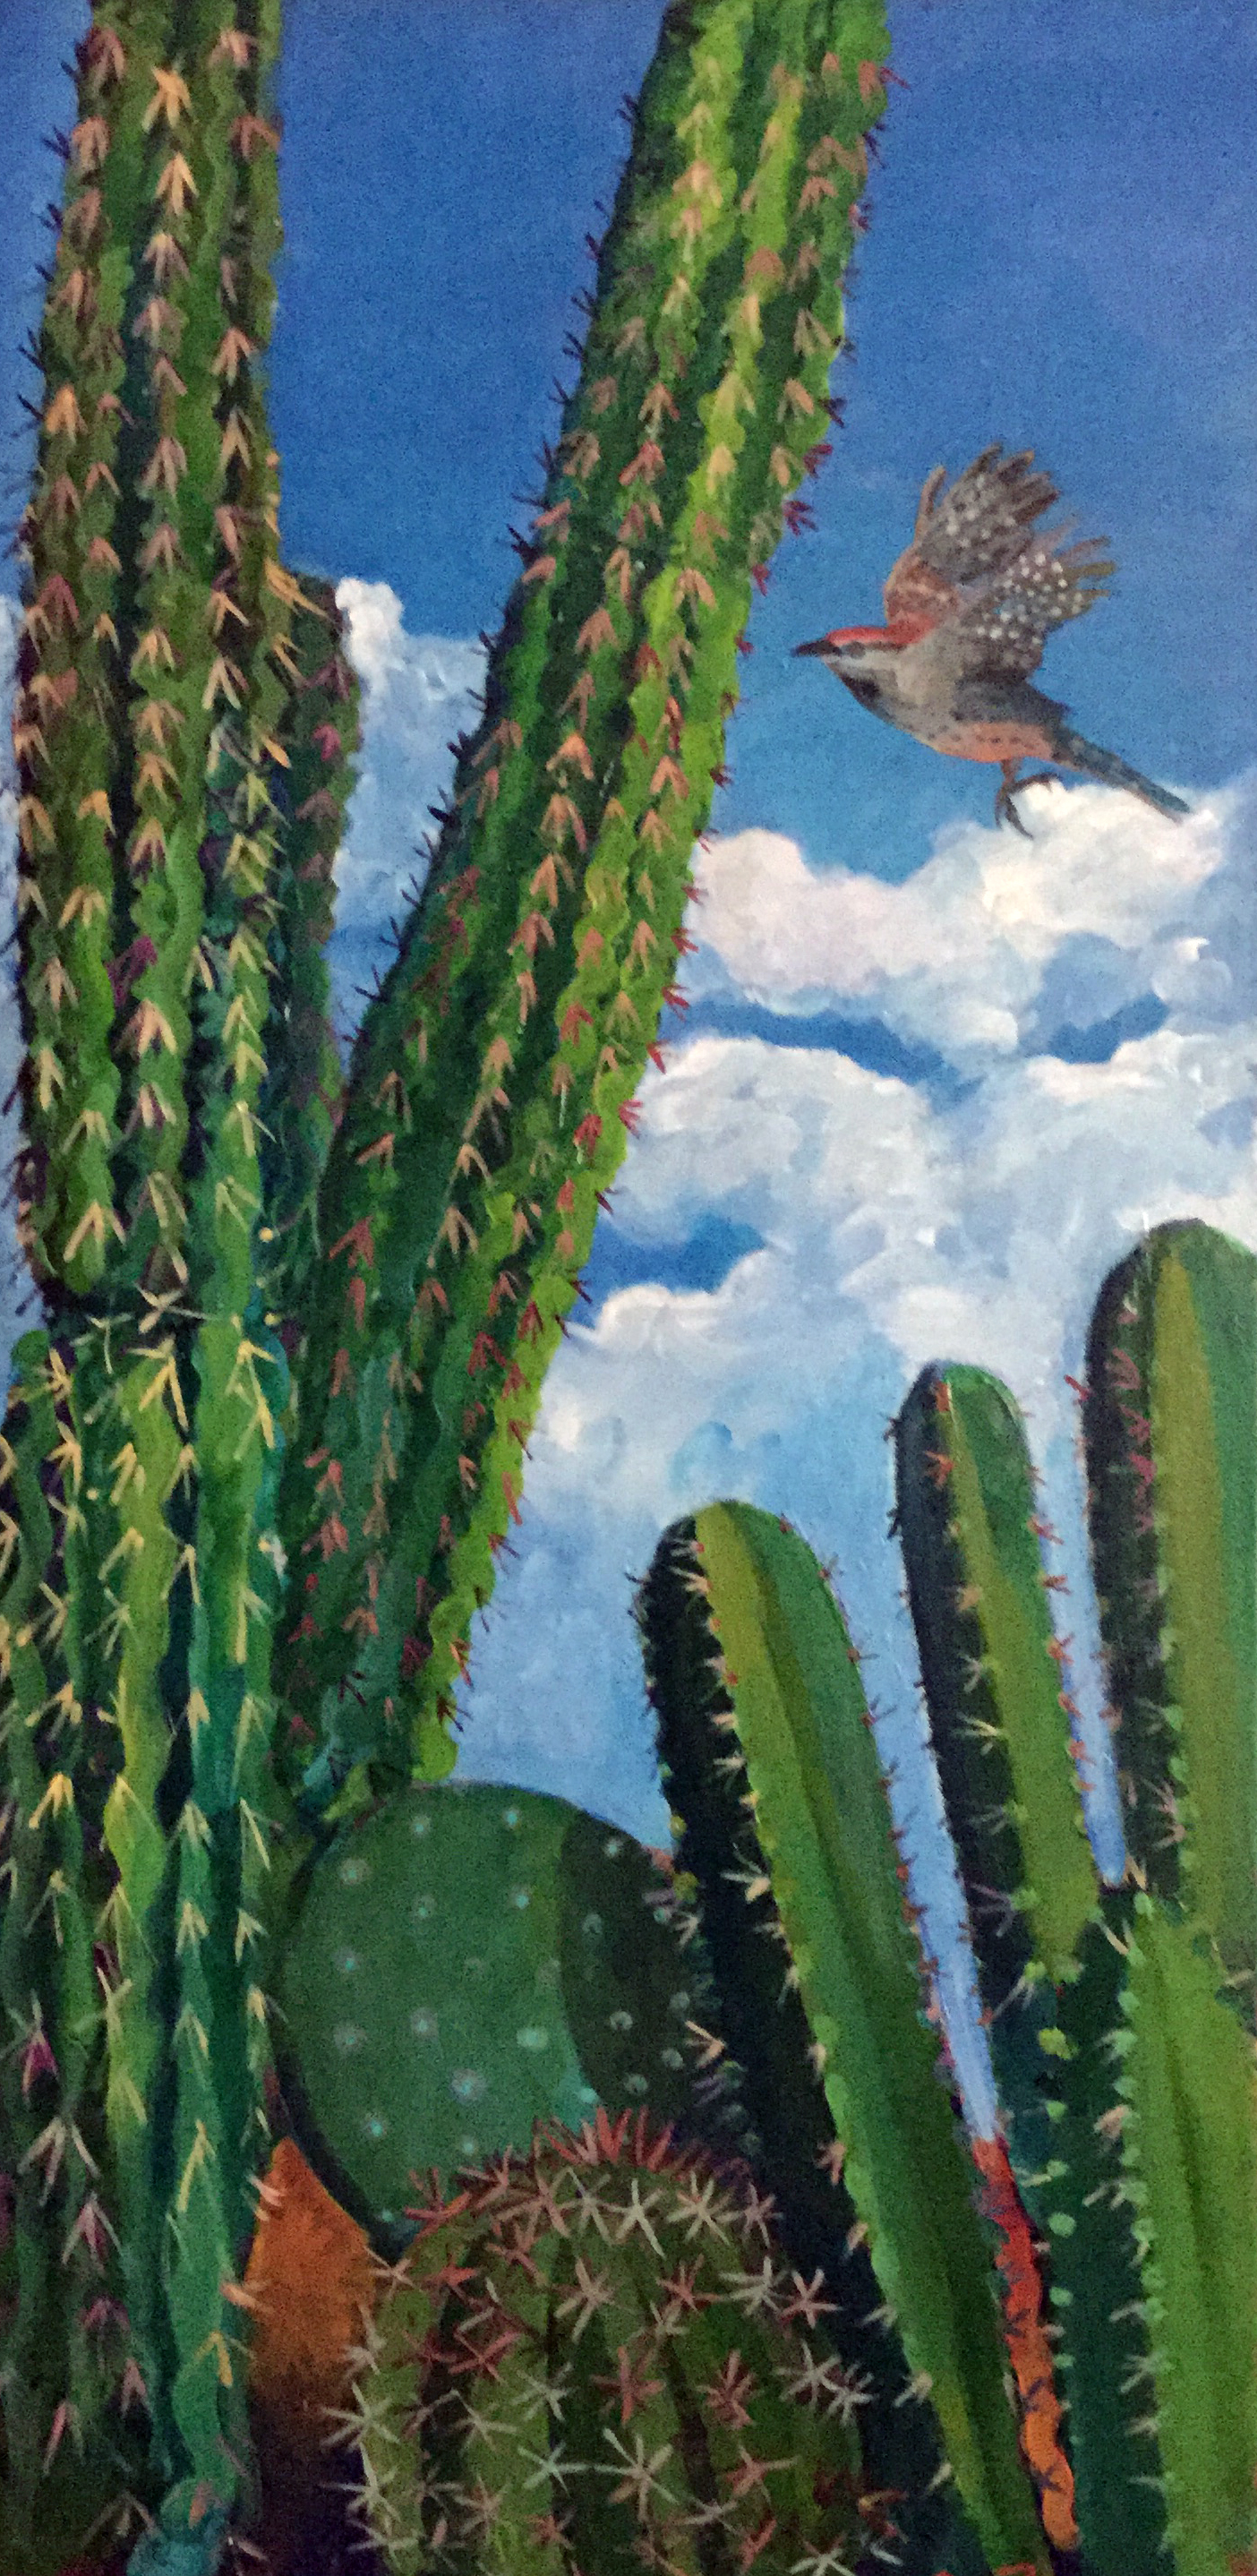 Cactus with birdie